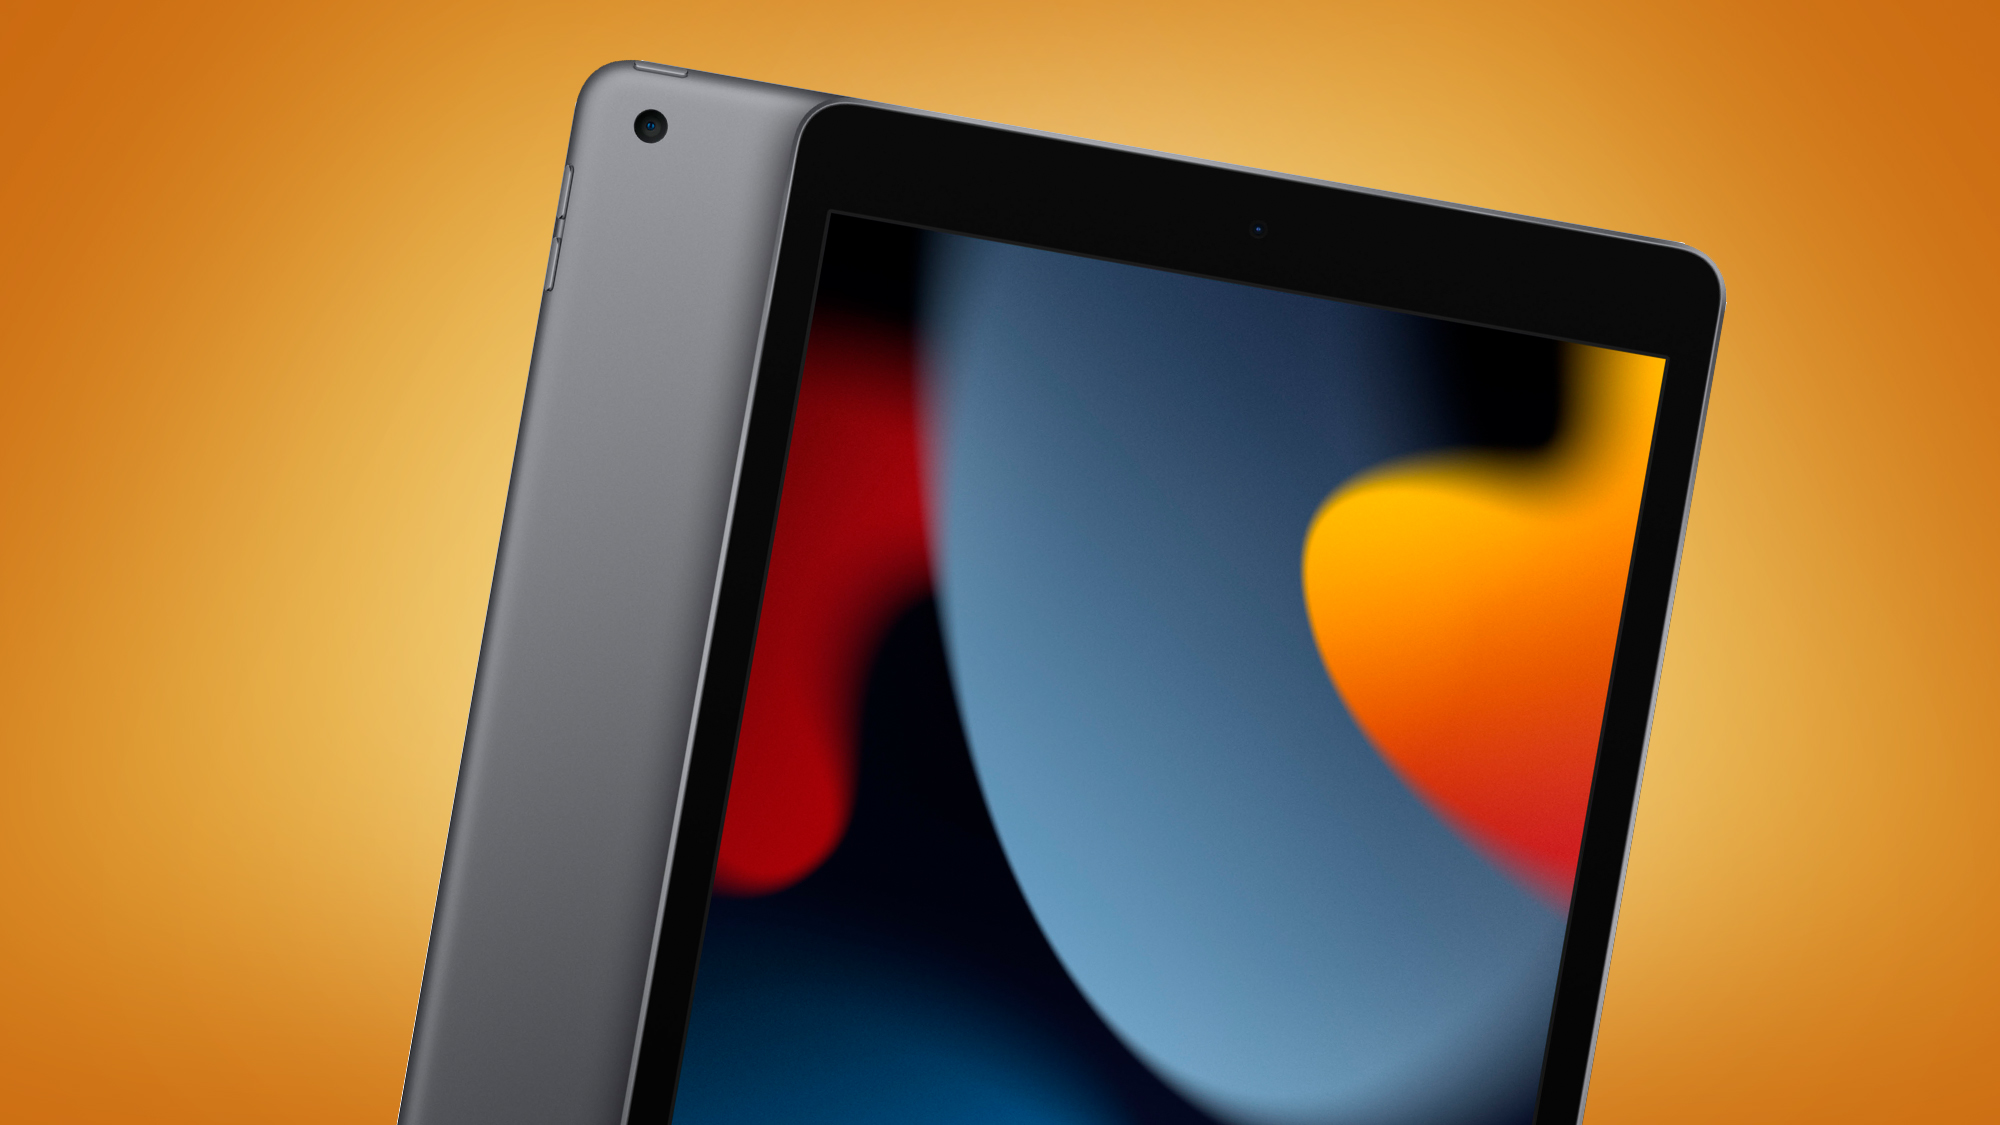 The 9th gen iPad on an orange background